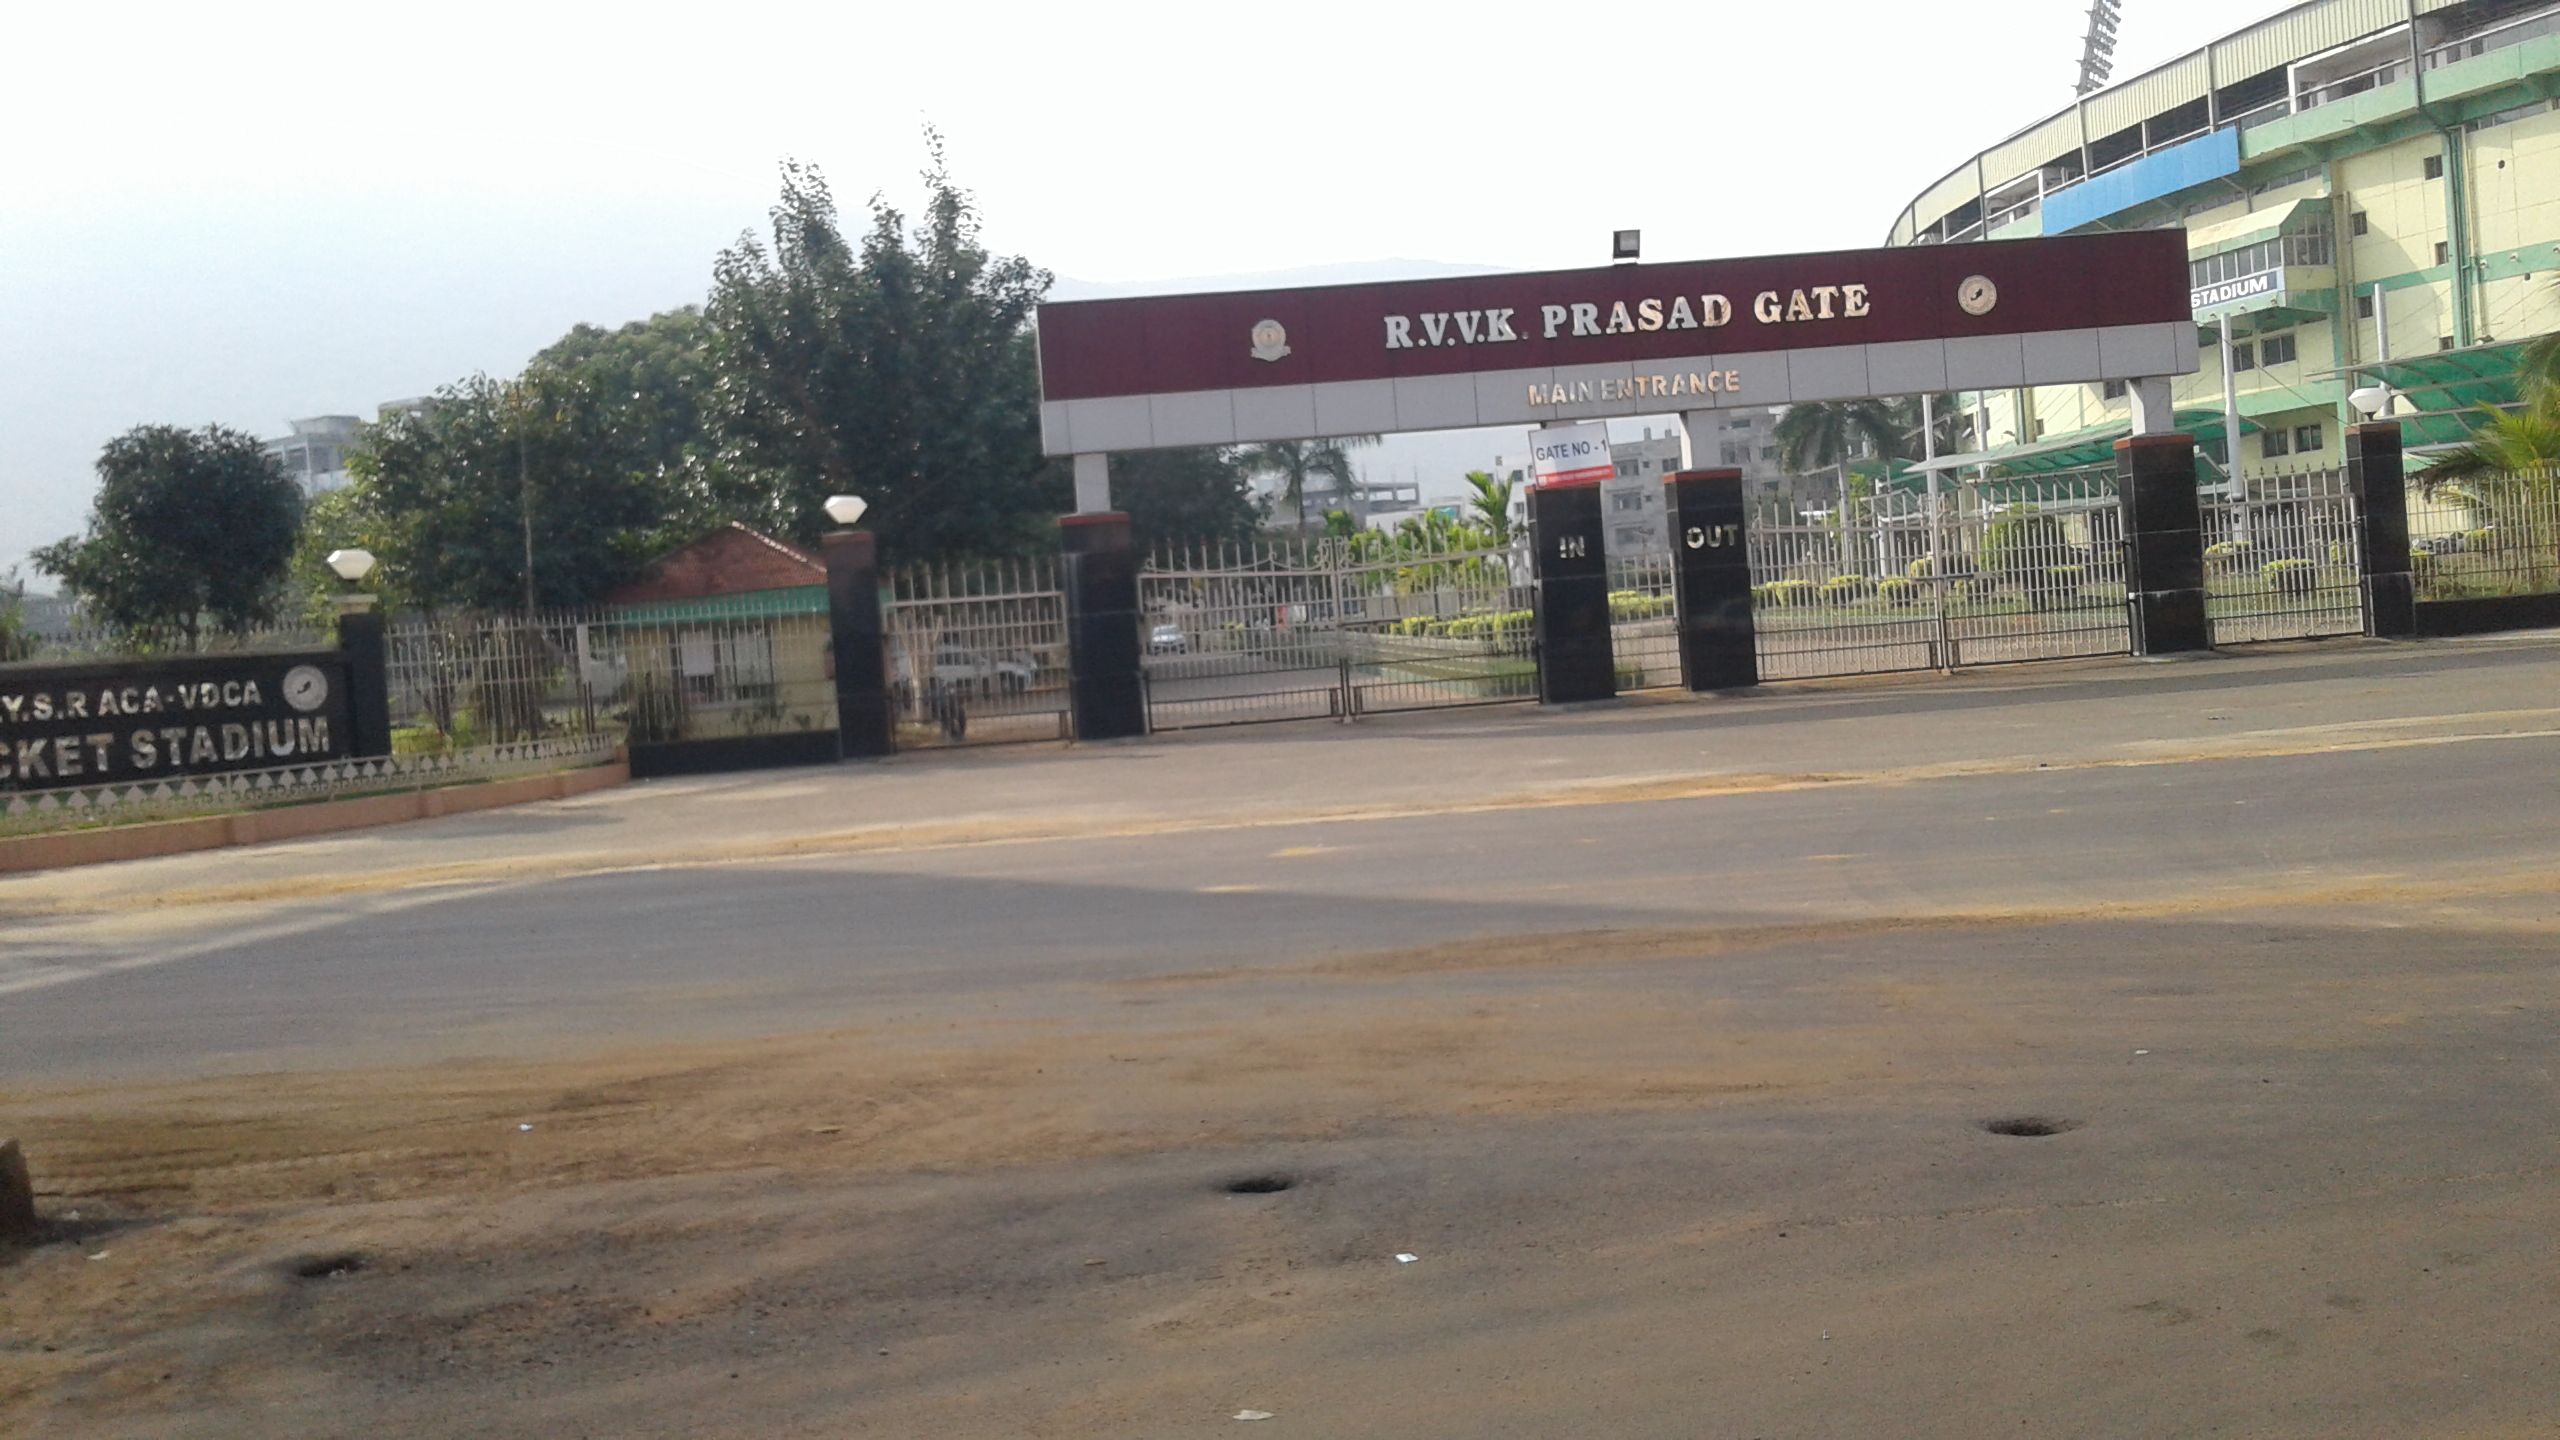 R.V.V.K. PRASAD GATE,  Main Entrance,  Dr. Y.S.R. ACA -VDCA CRICKET STADIUM, NH -5, PM Palem, Visakhapatnam, Andhra Pradesh, India - 530041